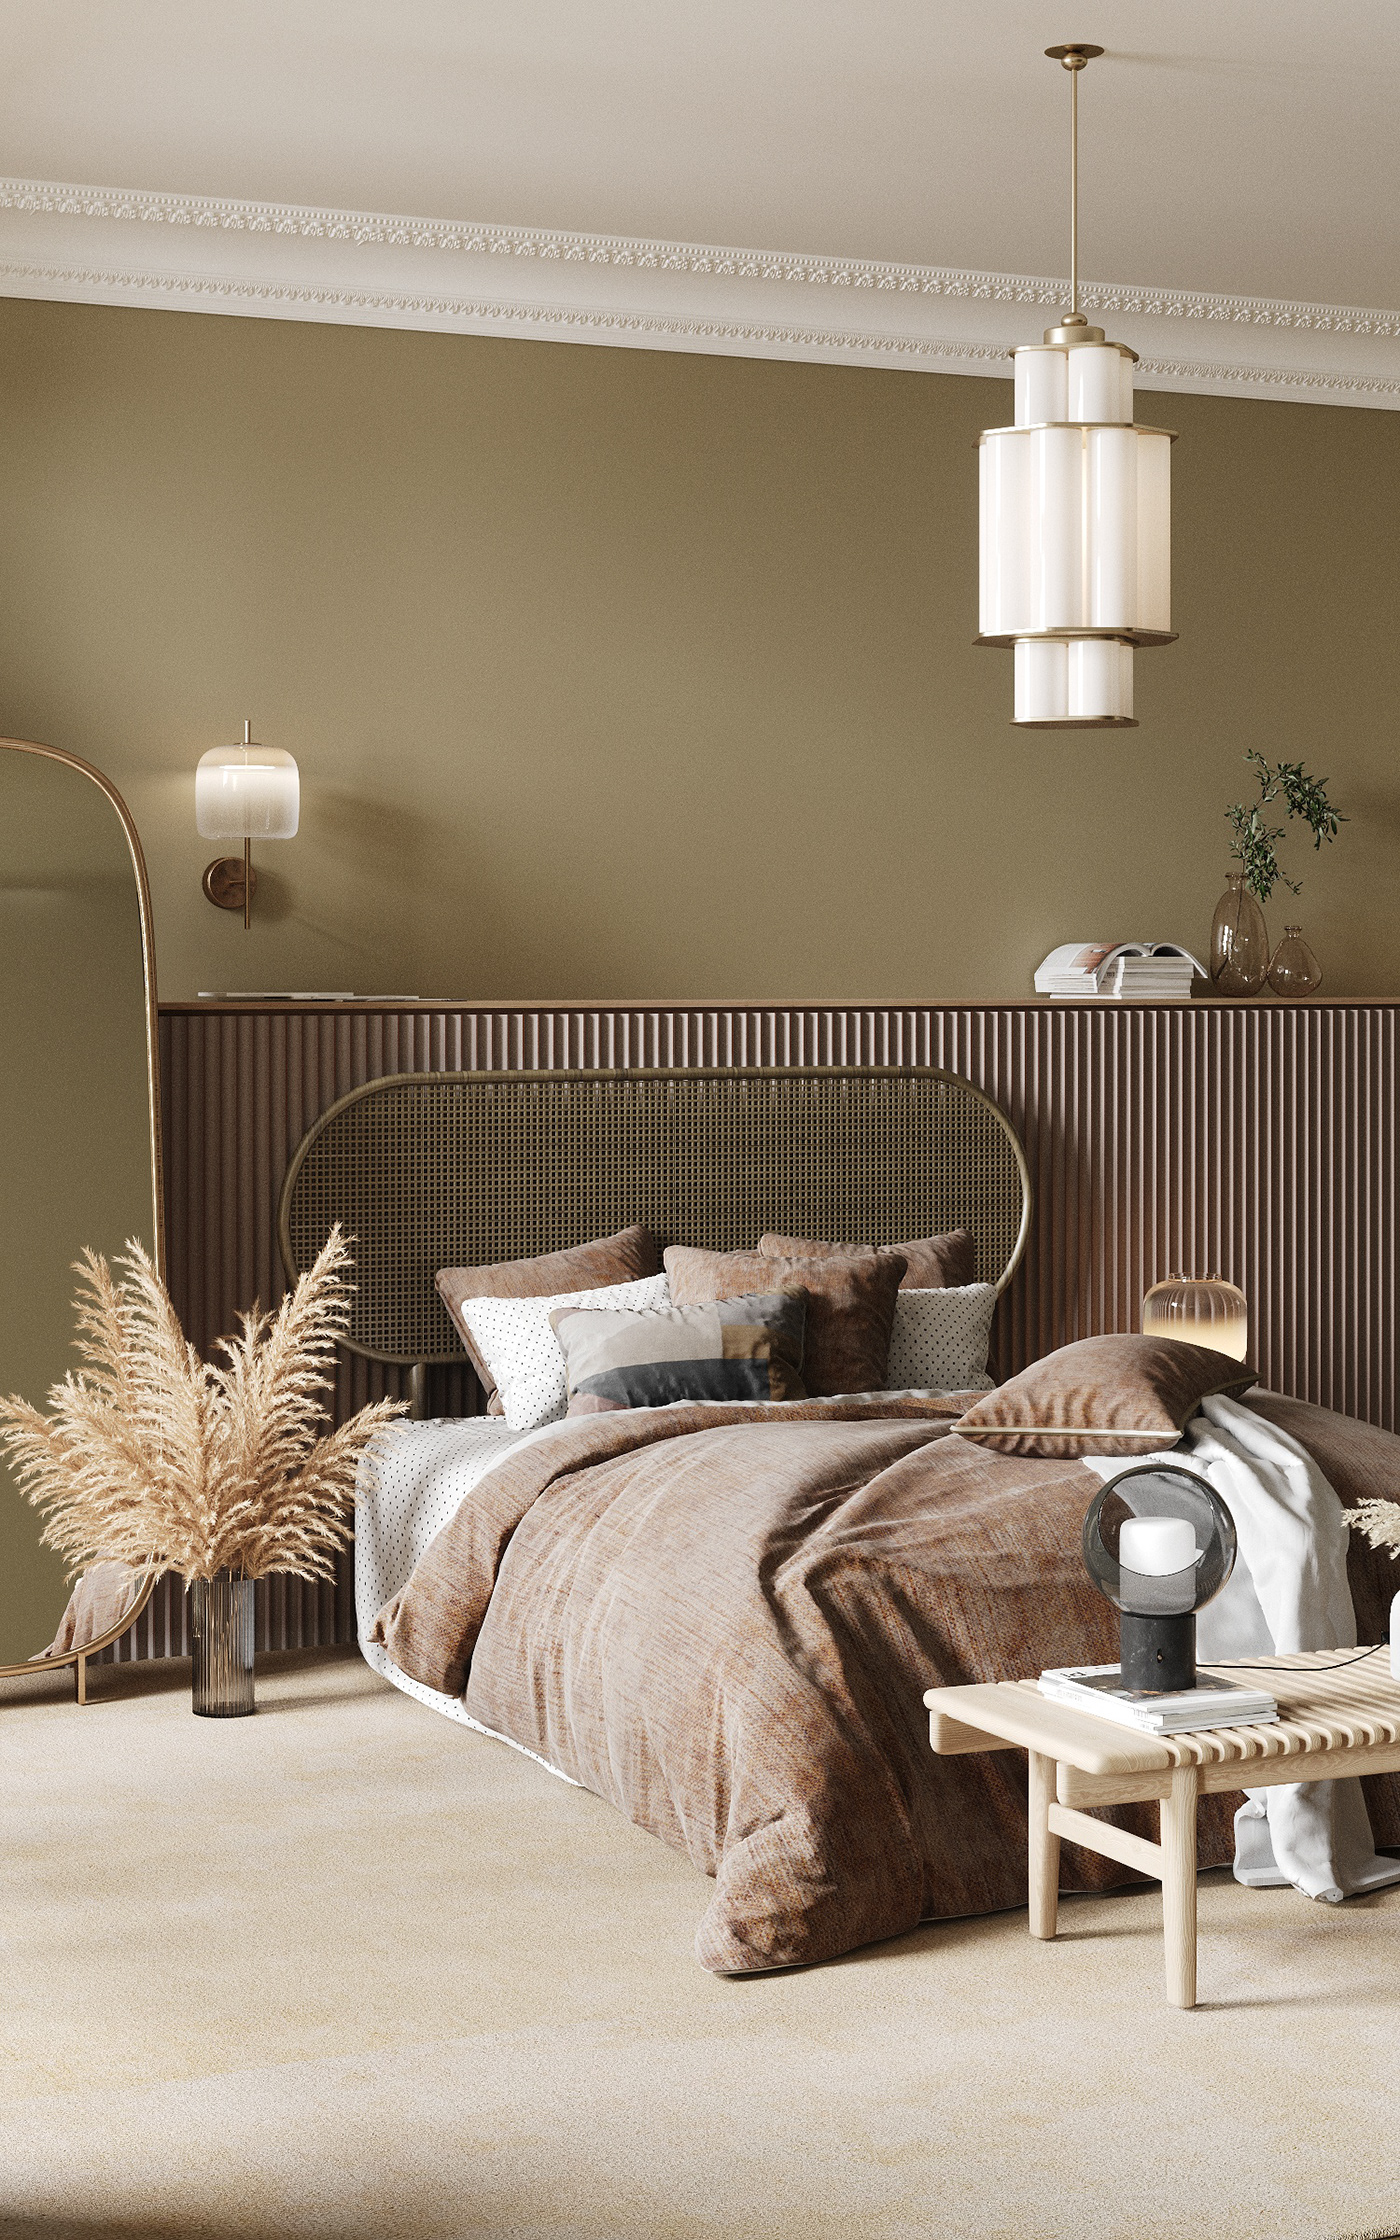 3ds max apartment archviz bedroom corona render  earthy tones interior design  Interior Visualization neutral palette Minimalism